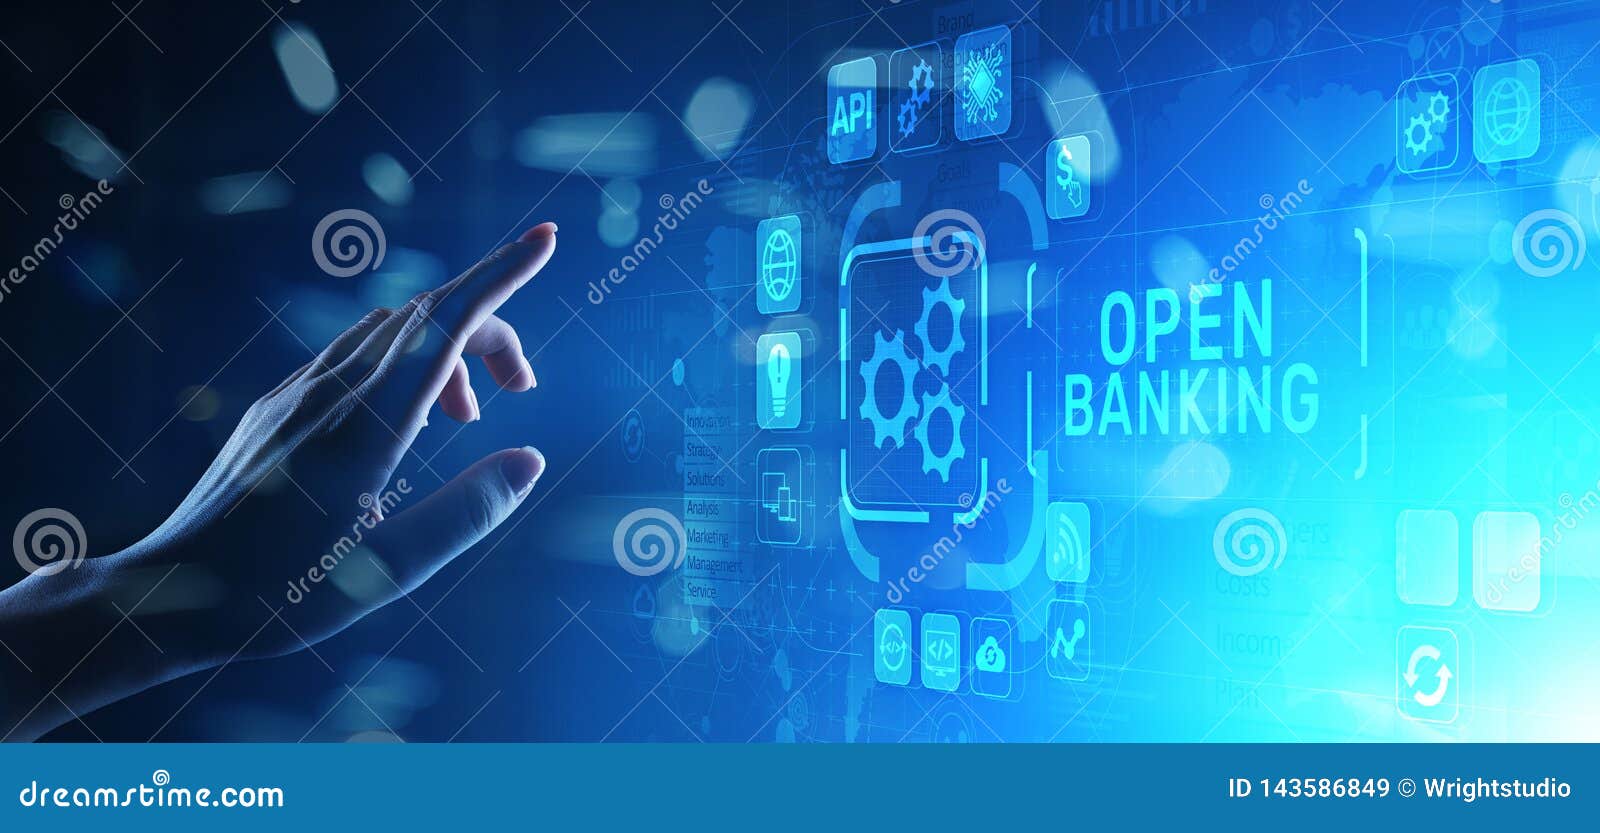 open banking financial technology fintech concept on virtual screen.